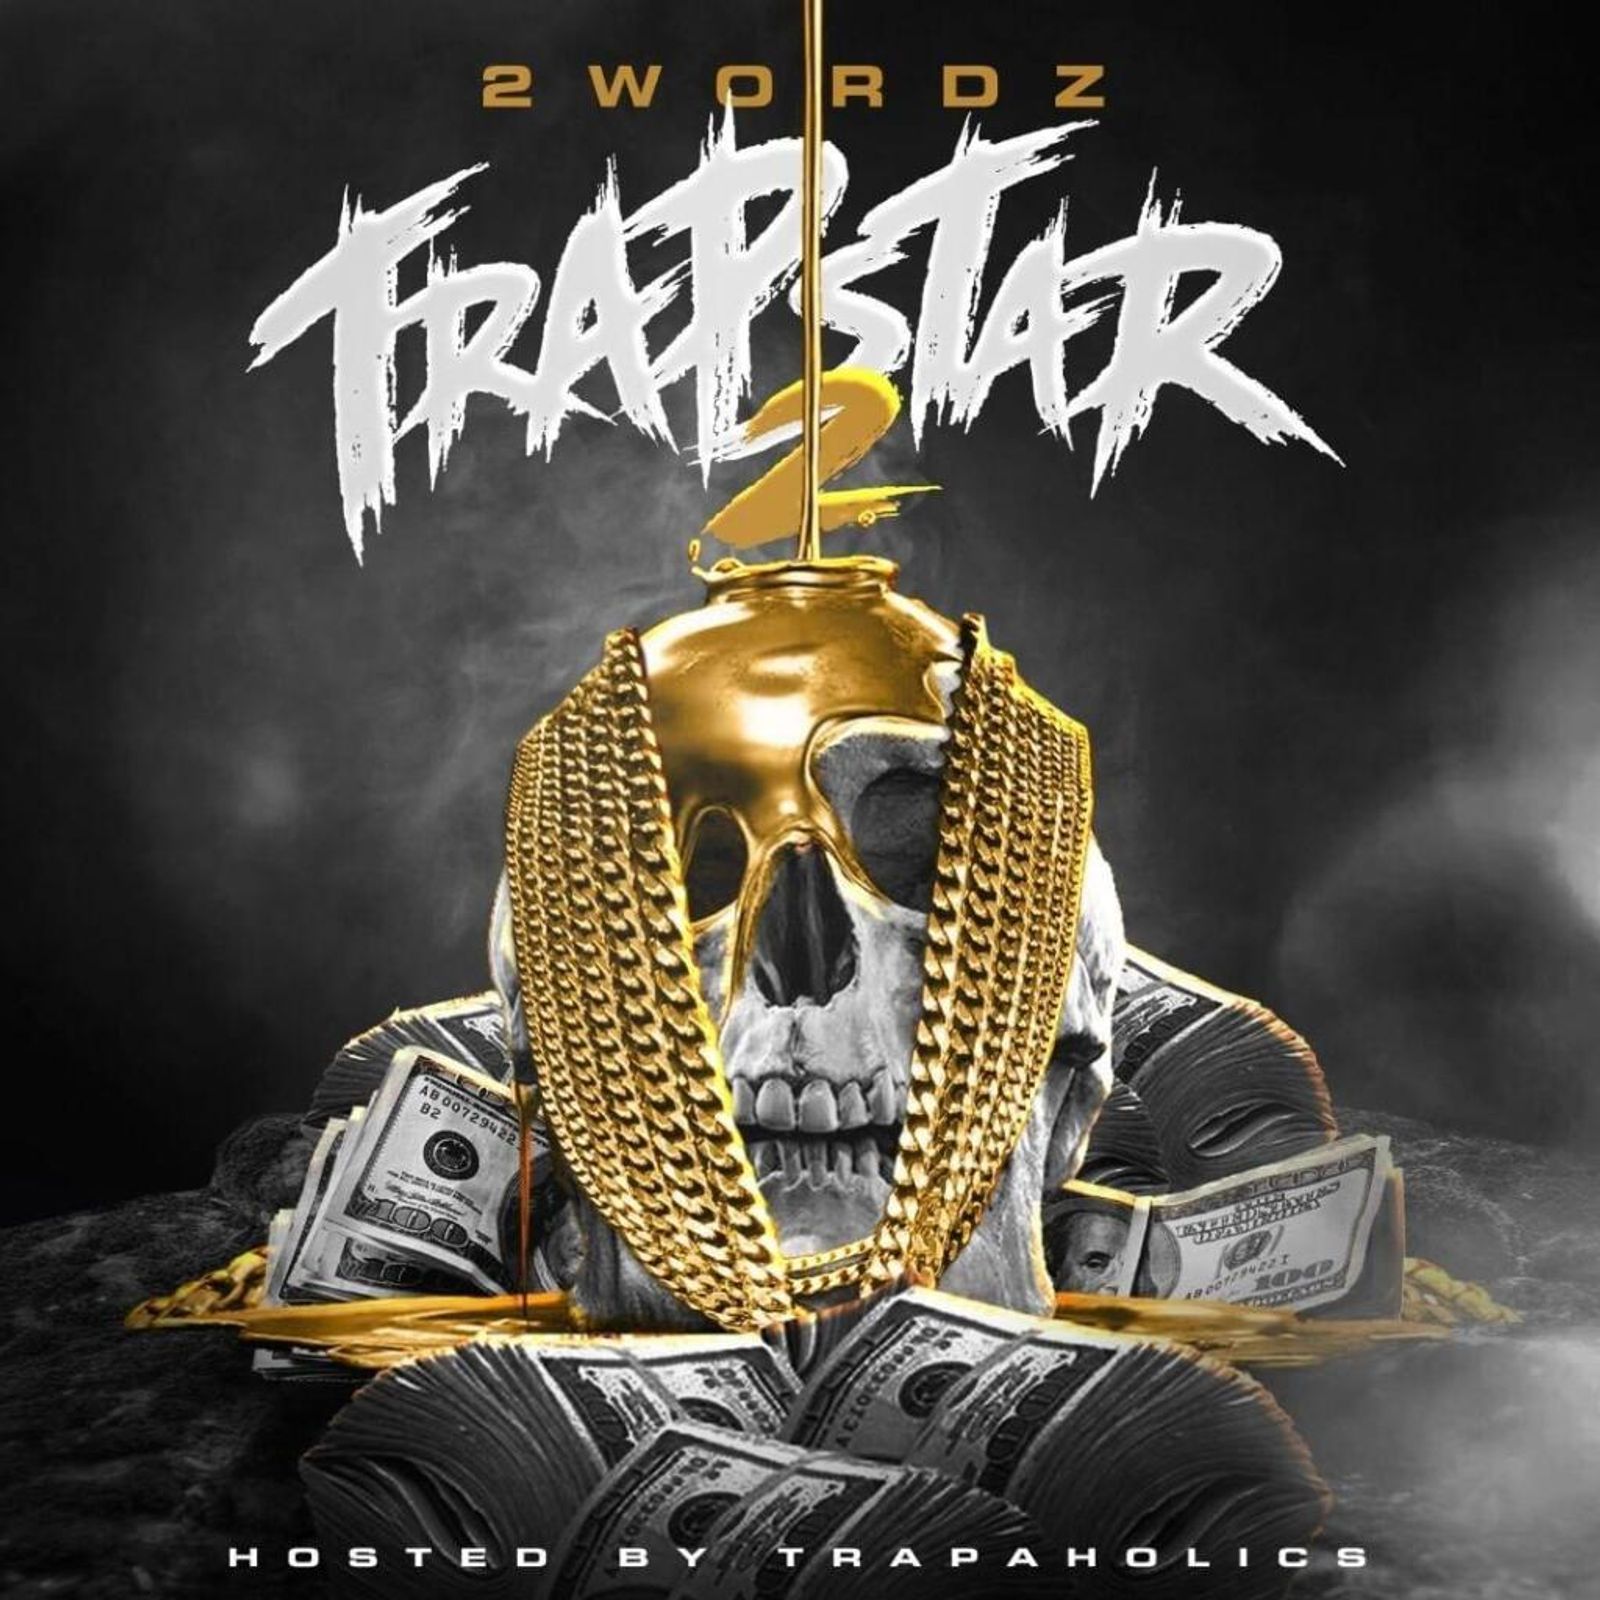 2wordz - Trap Star 2 Cover Art